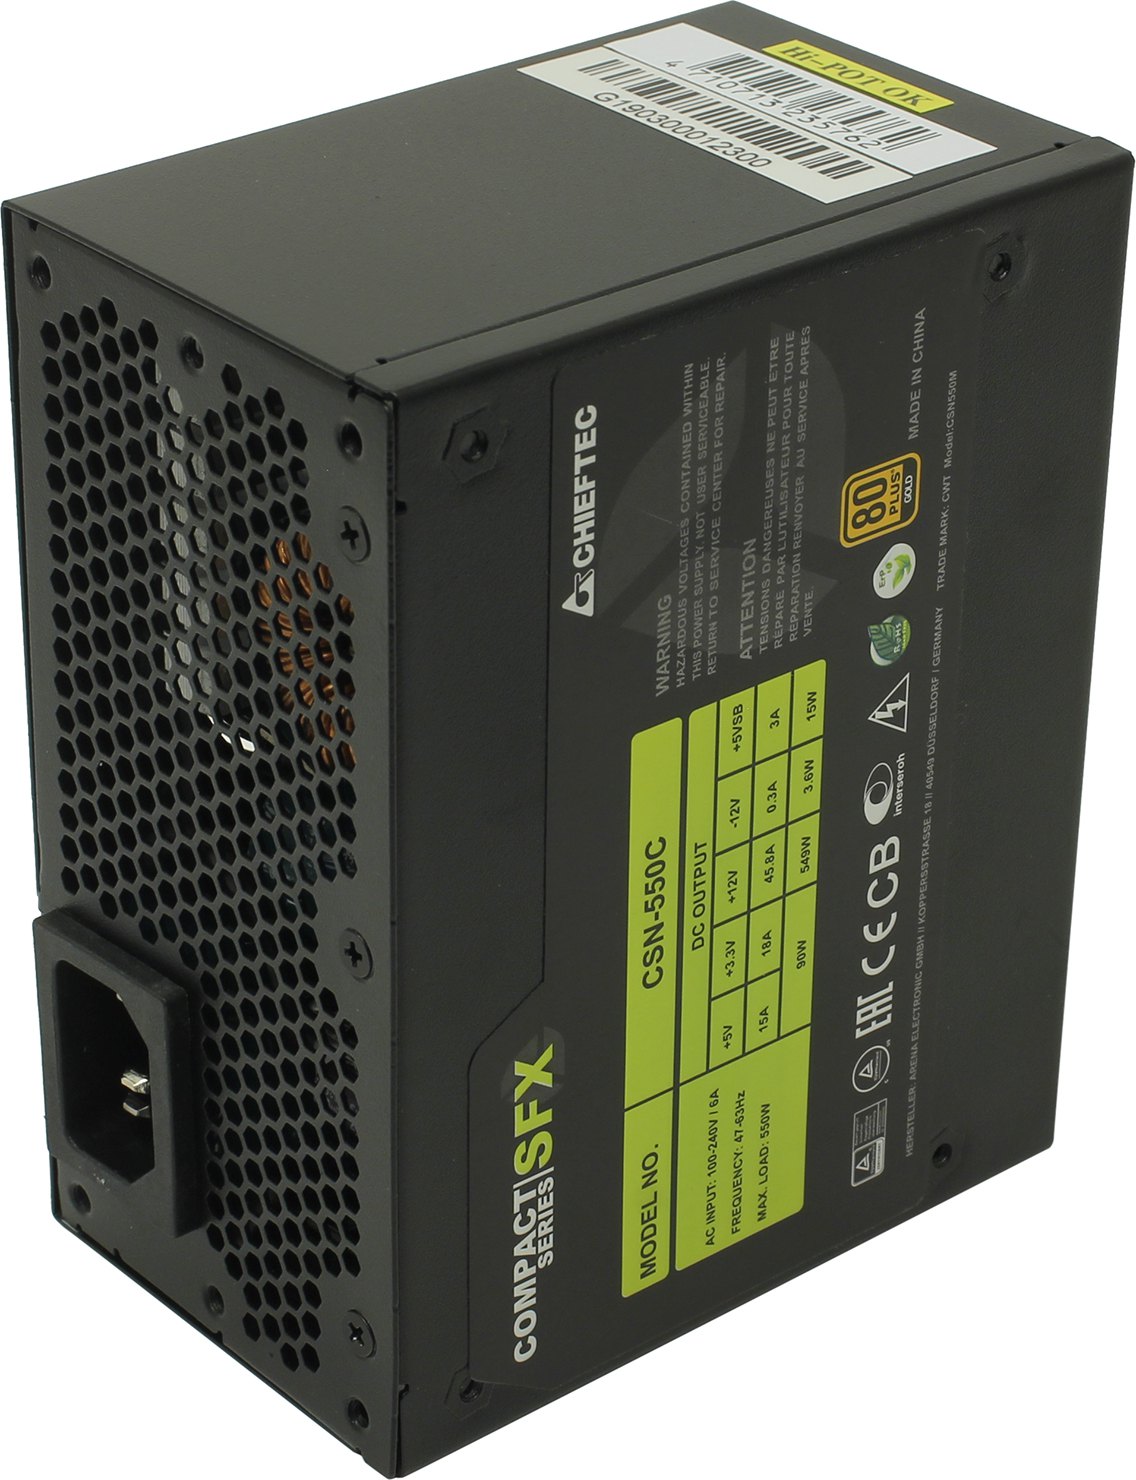 Блок питания Chieftec Compact CSN-550C SFX 80PLUS GOLD 550W Box блок питания для компьютера chieftec 650w sfx compact csn 650c